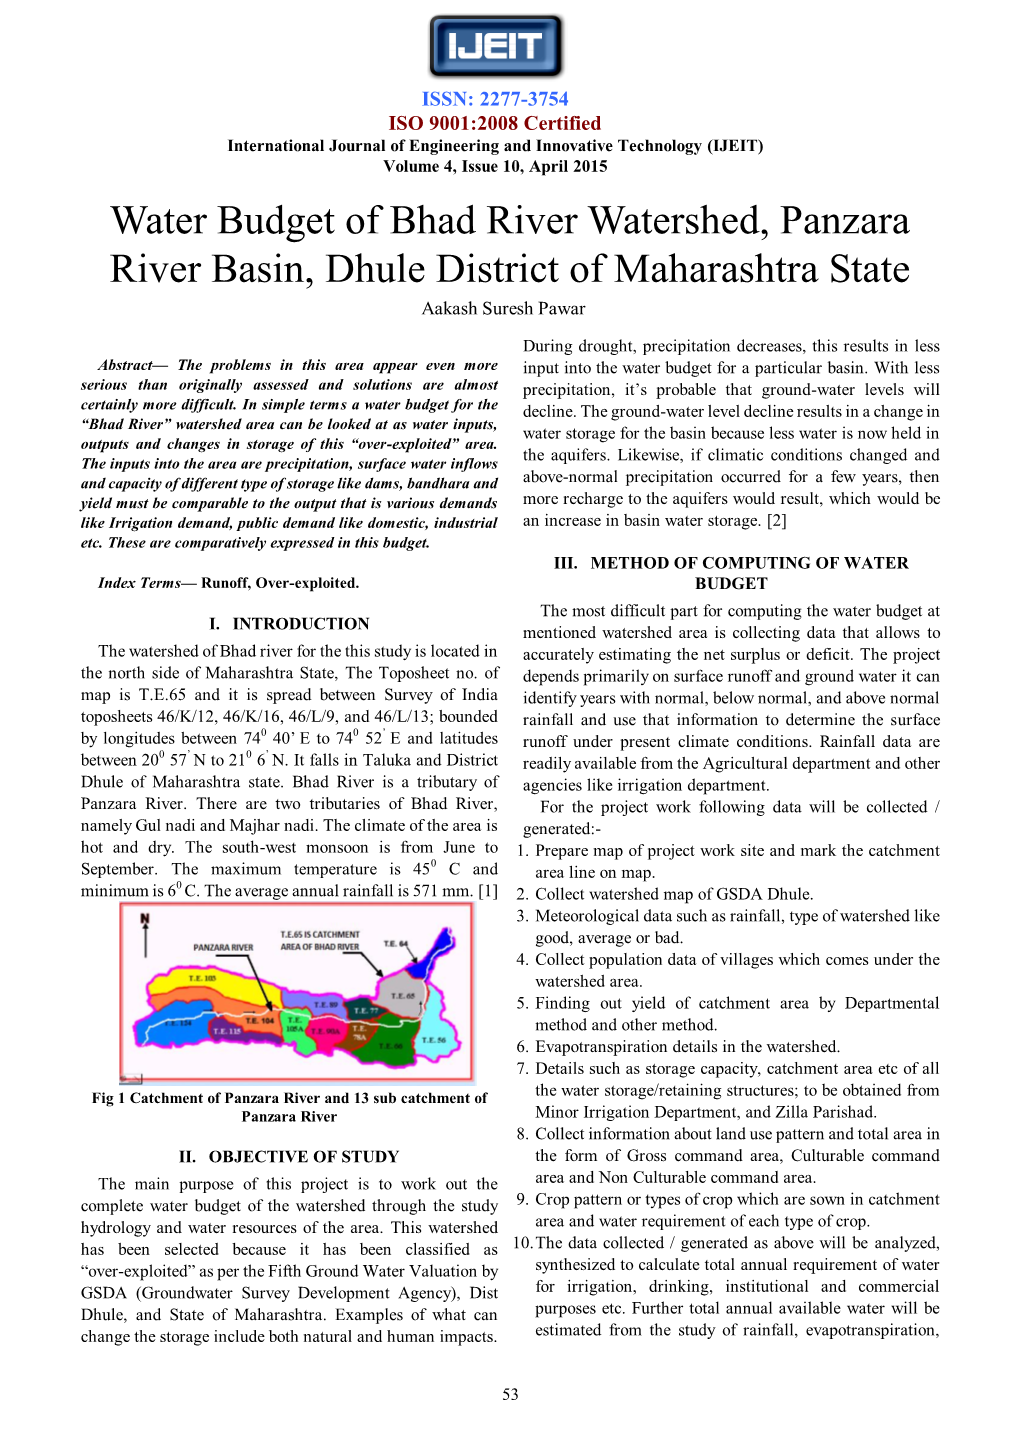 Water Budget of Bhad River Watershed, Panzara River Basin, Dhule District of Maharashtra State Aakash Suresh Pawar